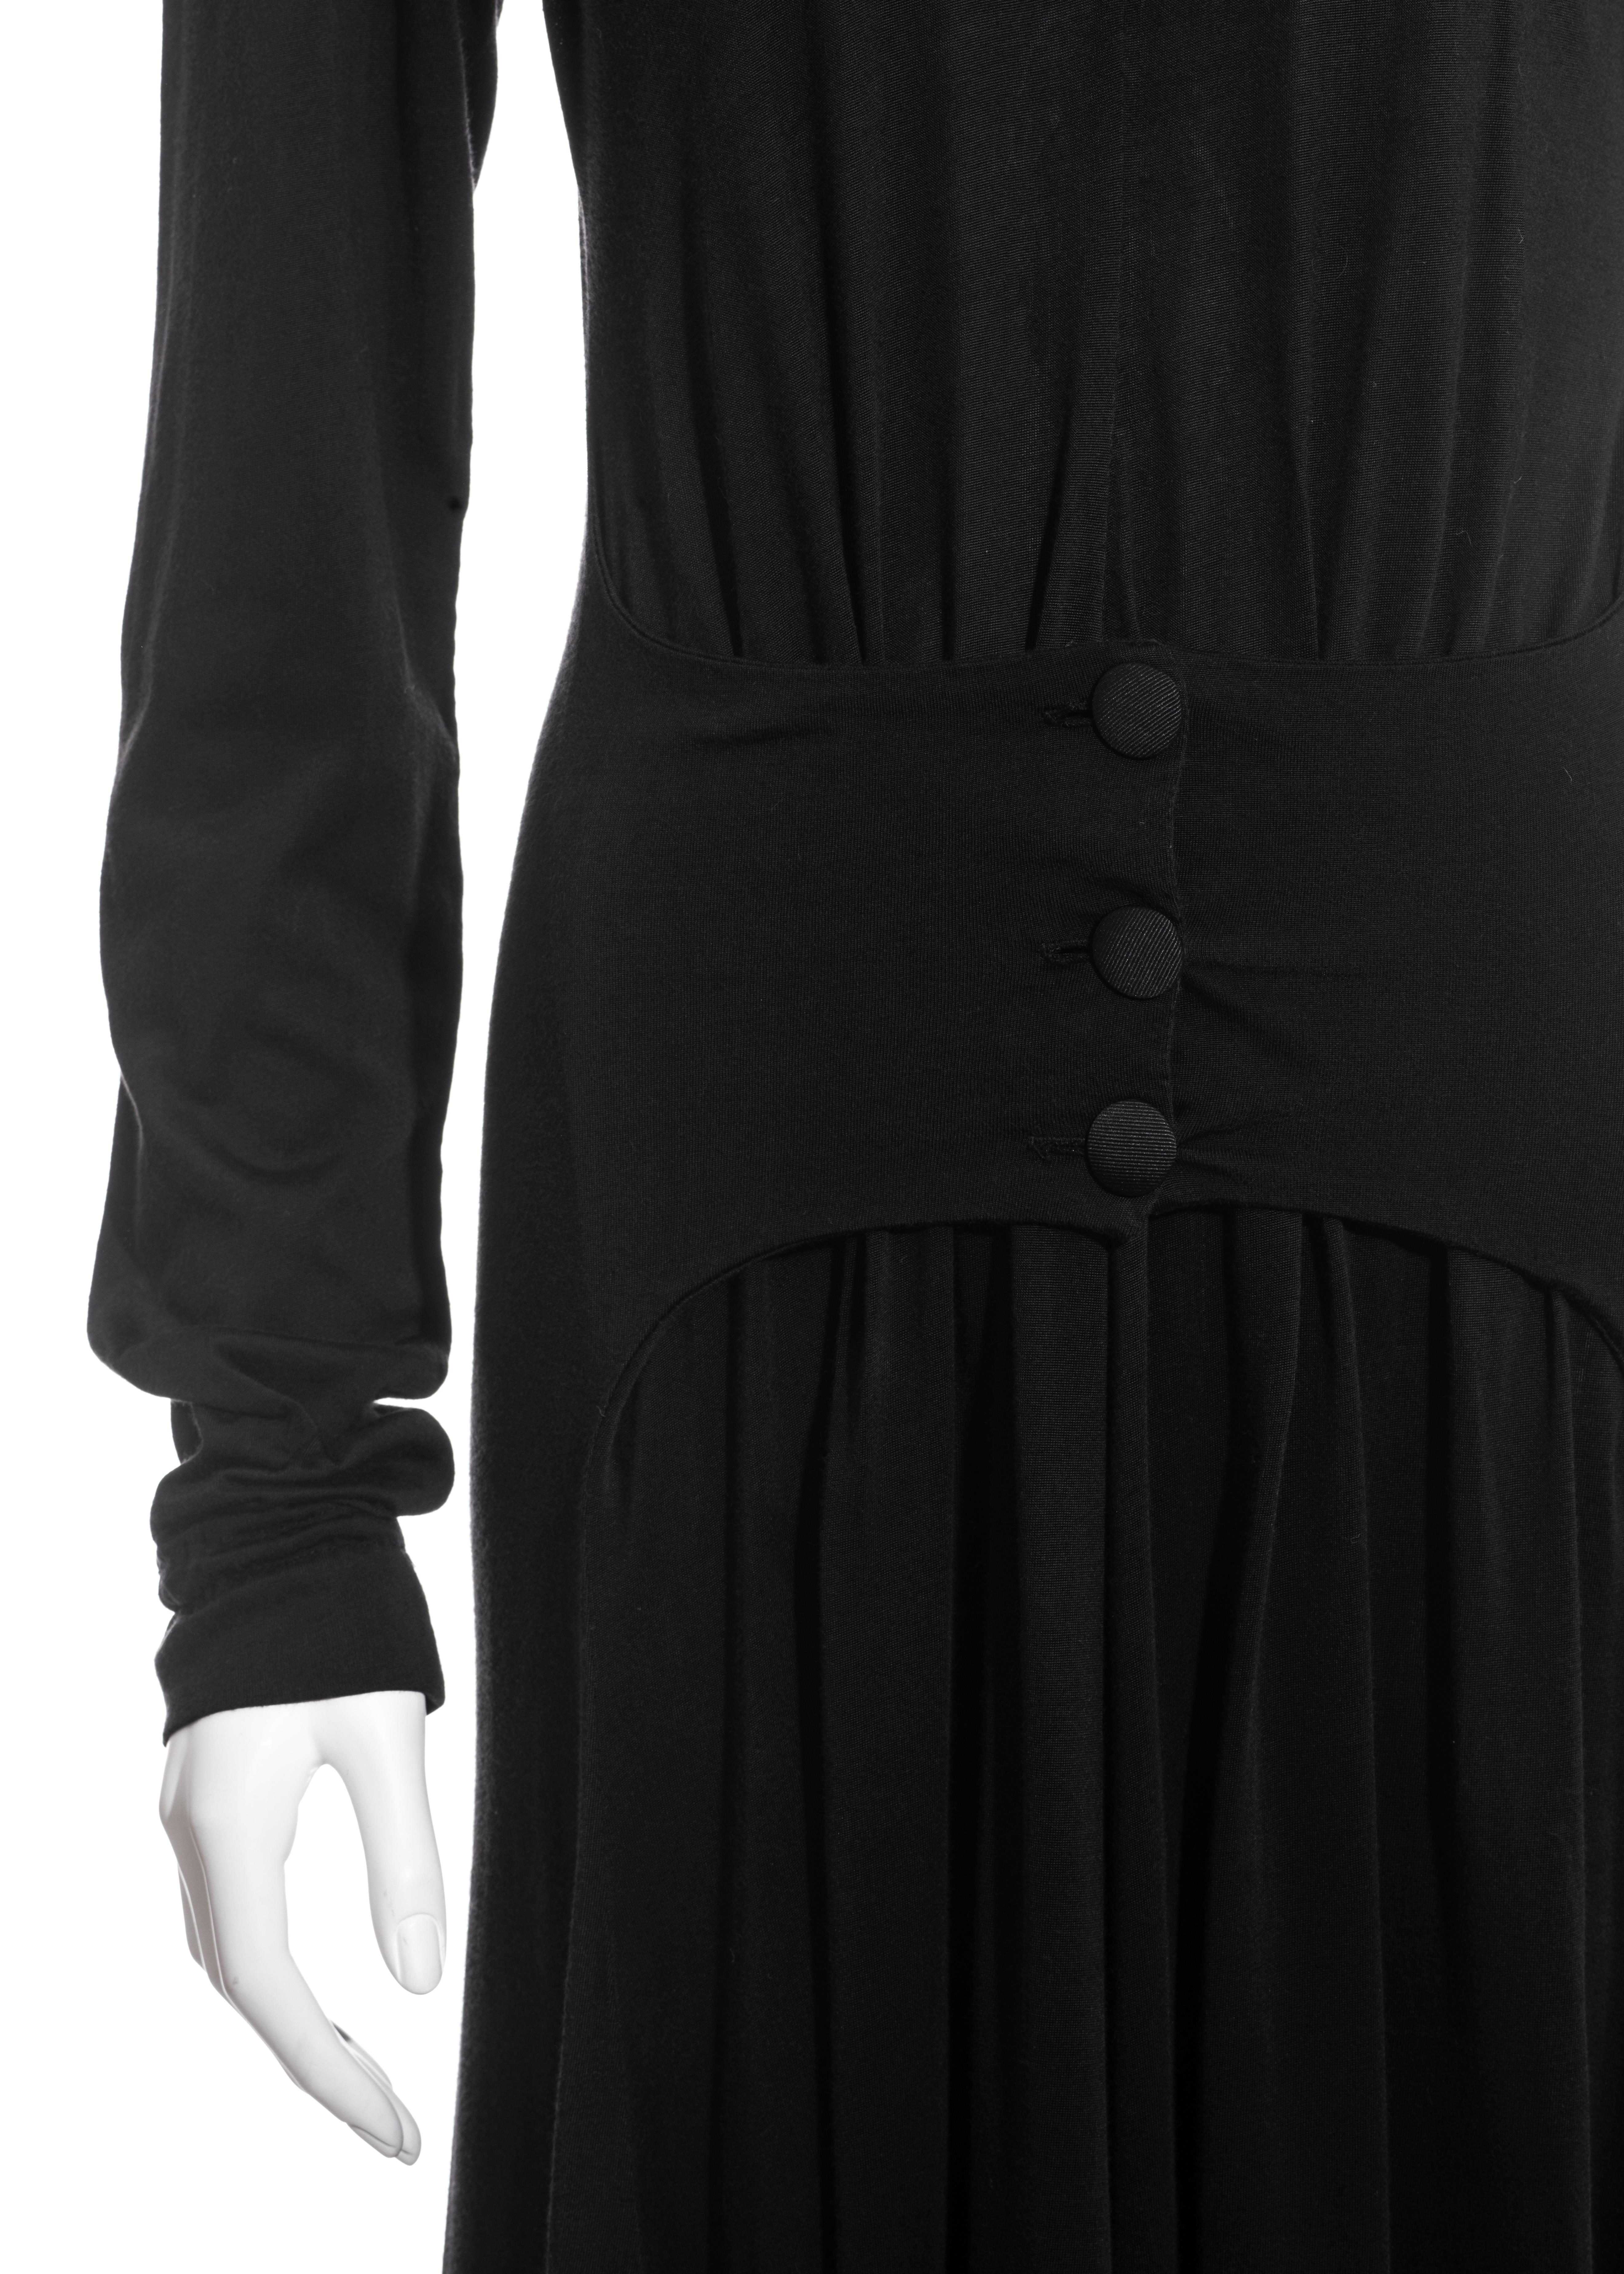 Black BodyMap black viscose cotton jersey maxi dress, c. 1980s For Sale